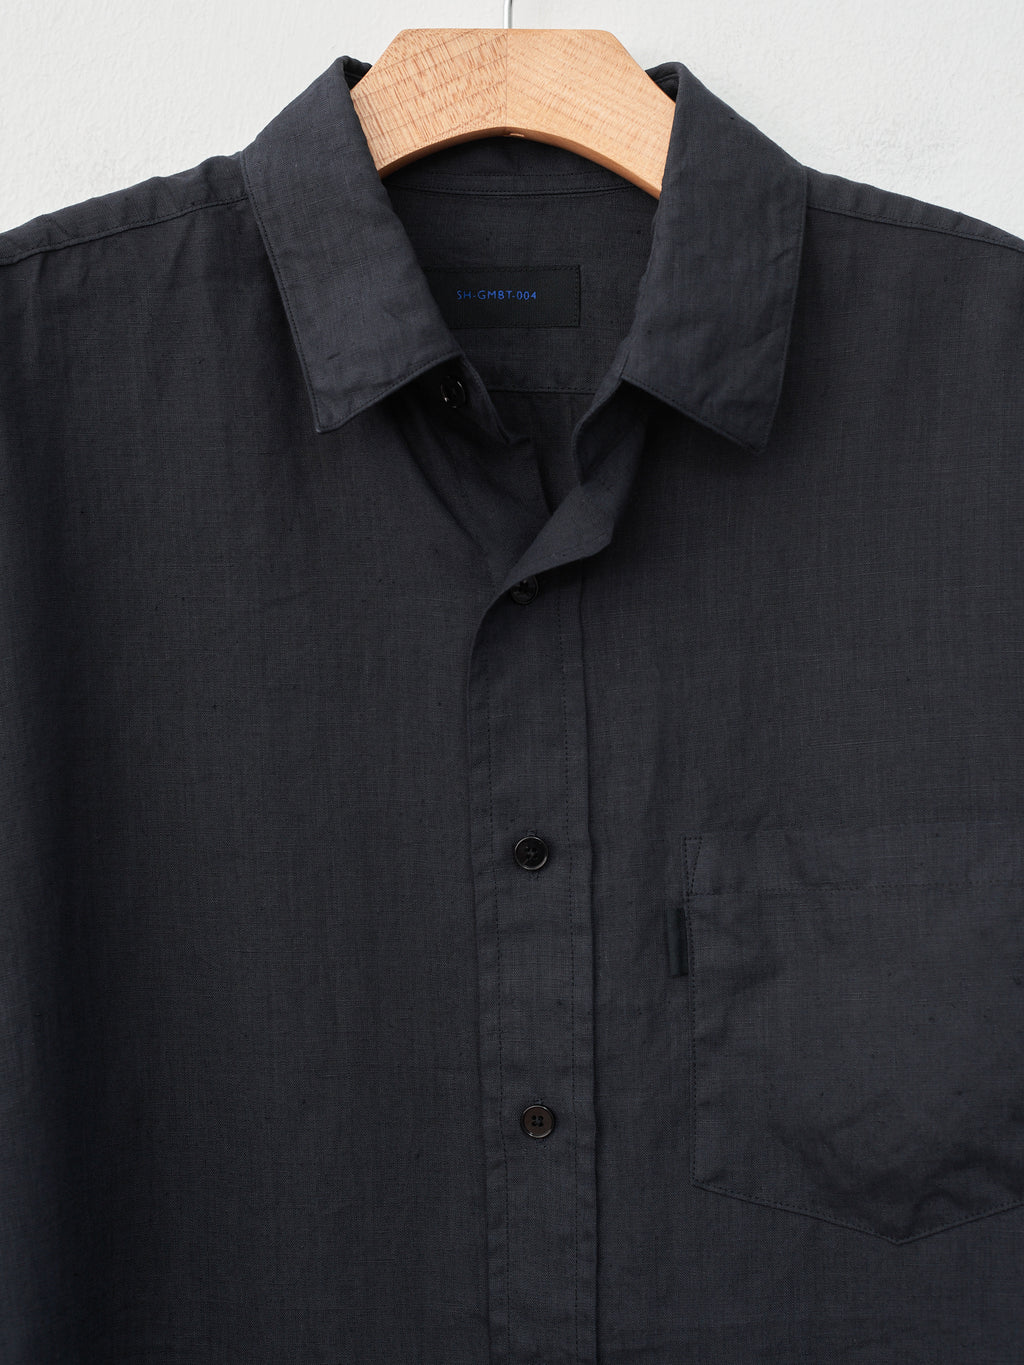 Namu Shop - SH Shirt Regular Collar Shirt - Ink Black Linen Garment Dye